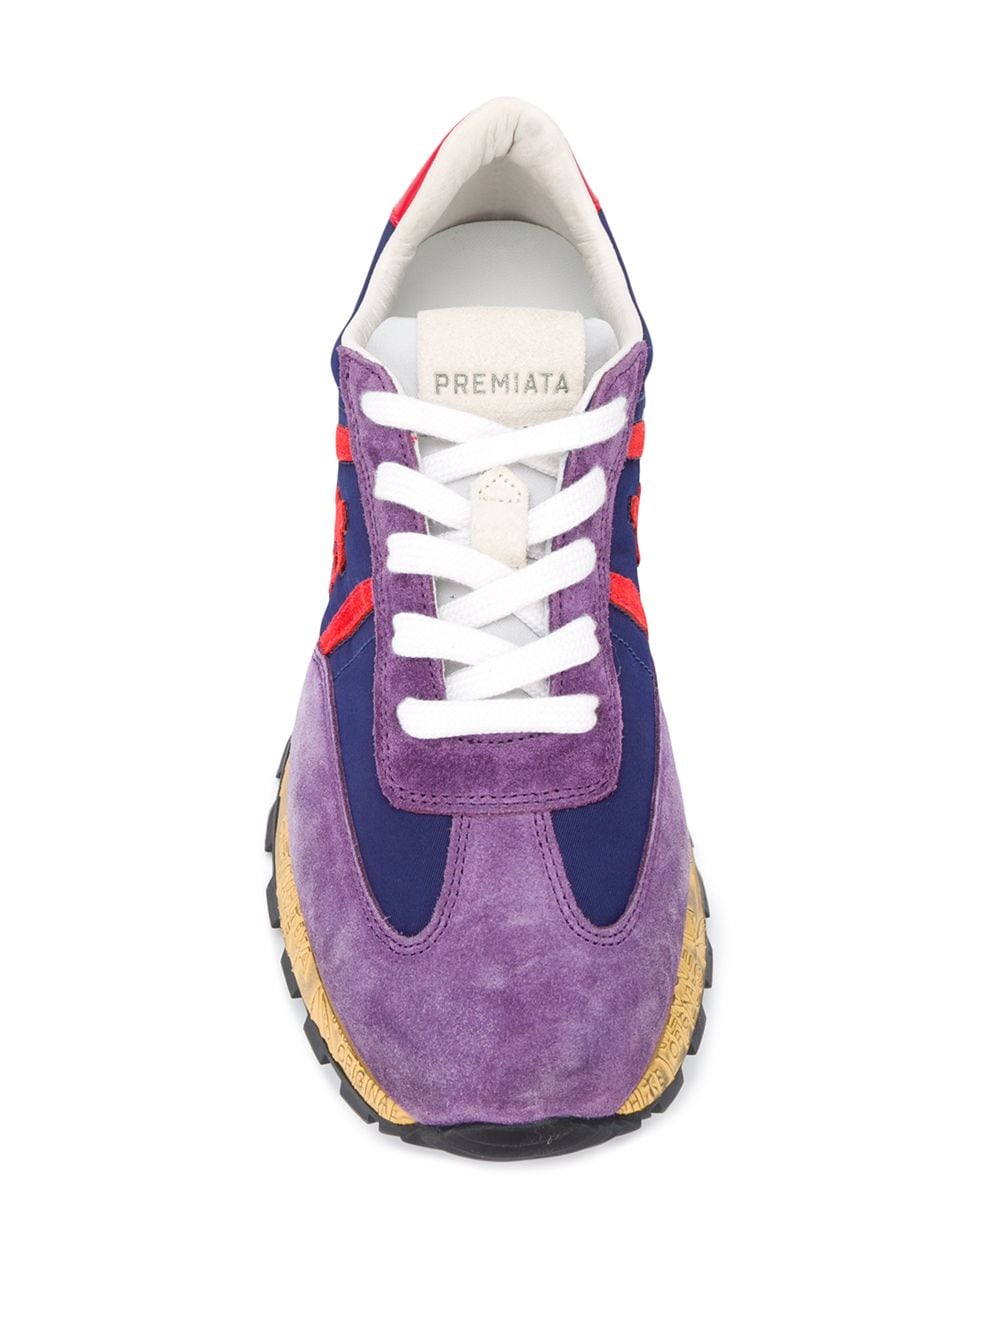 Premiata - John Low D Sneakers: Purple Multi